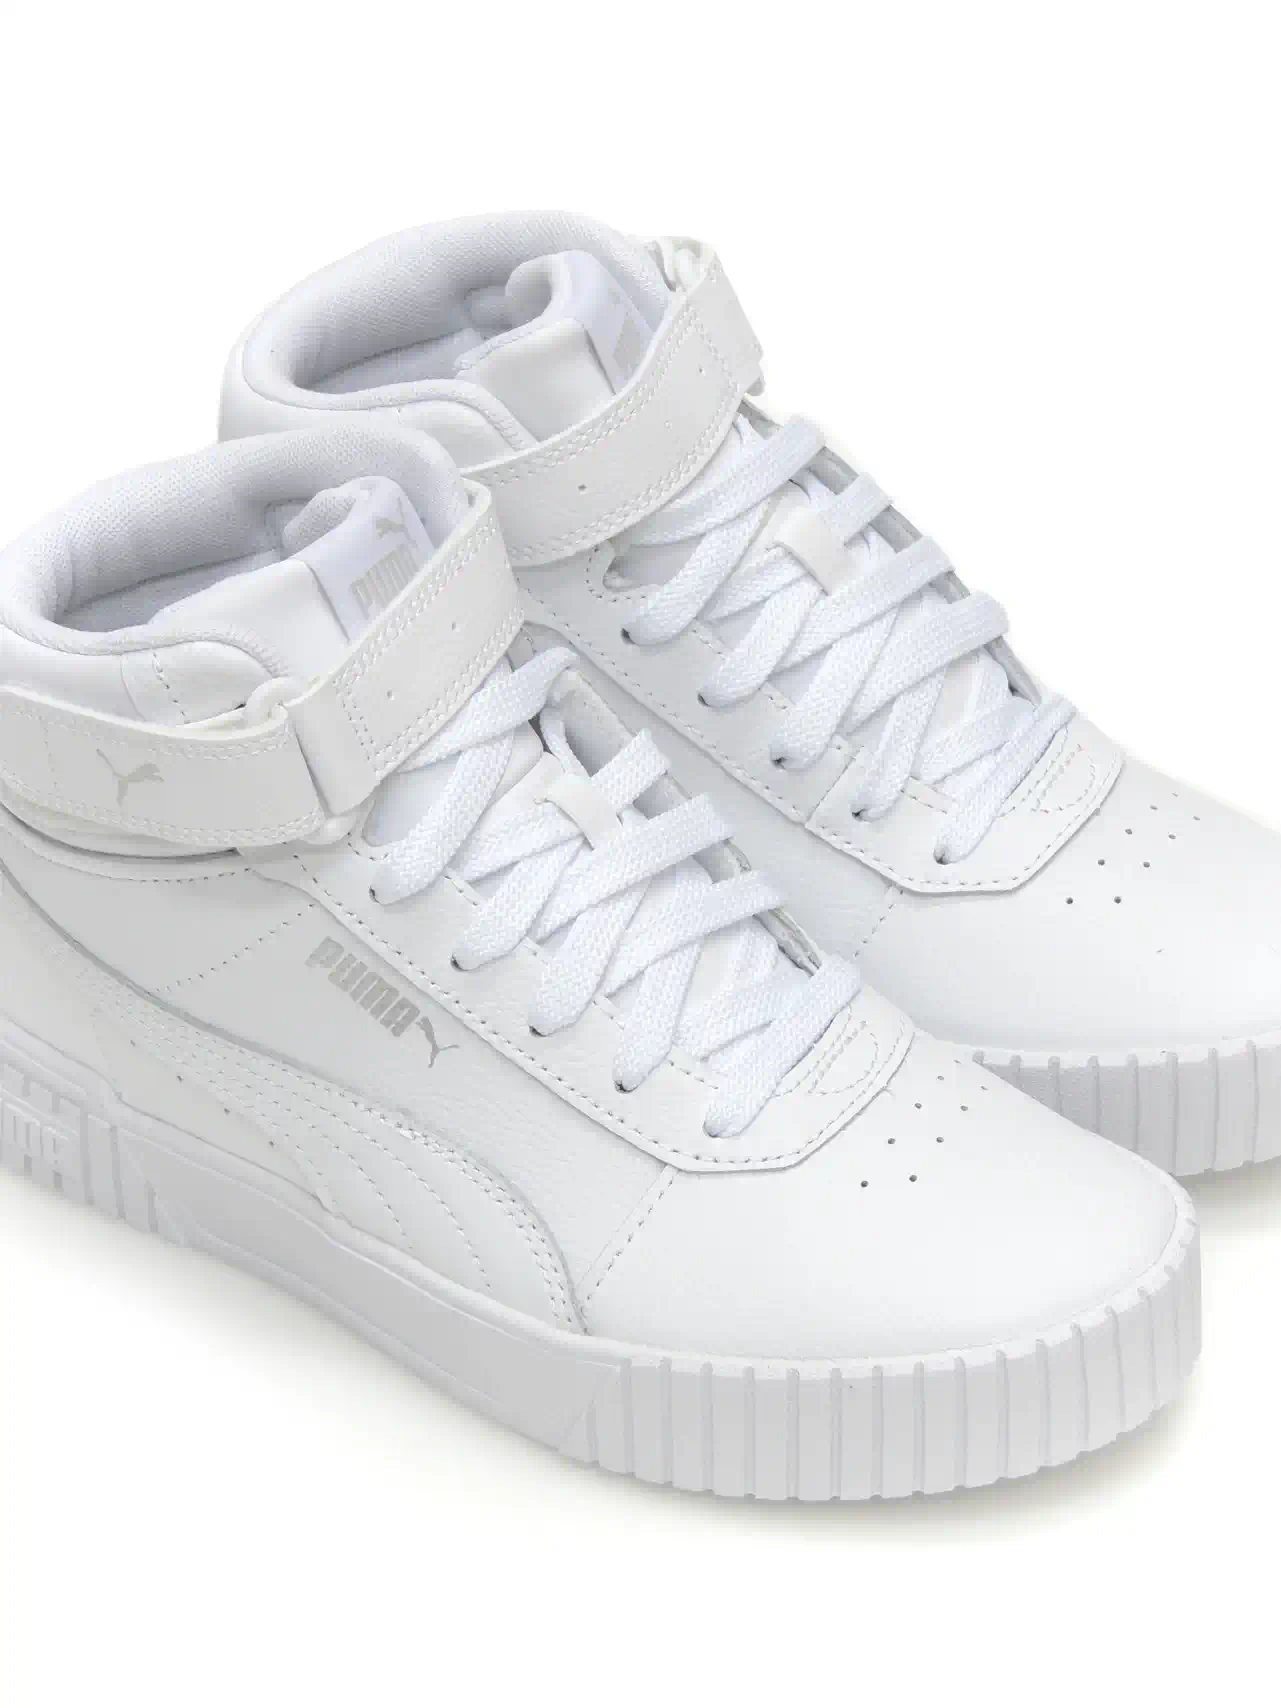 sneakers--puma-395851-polipiel-blanco